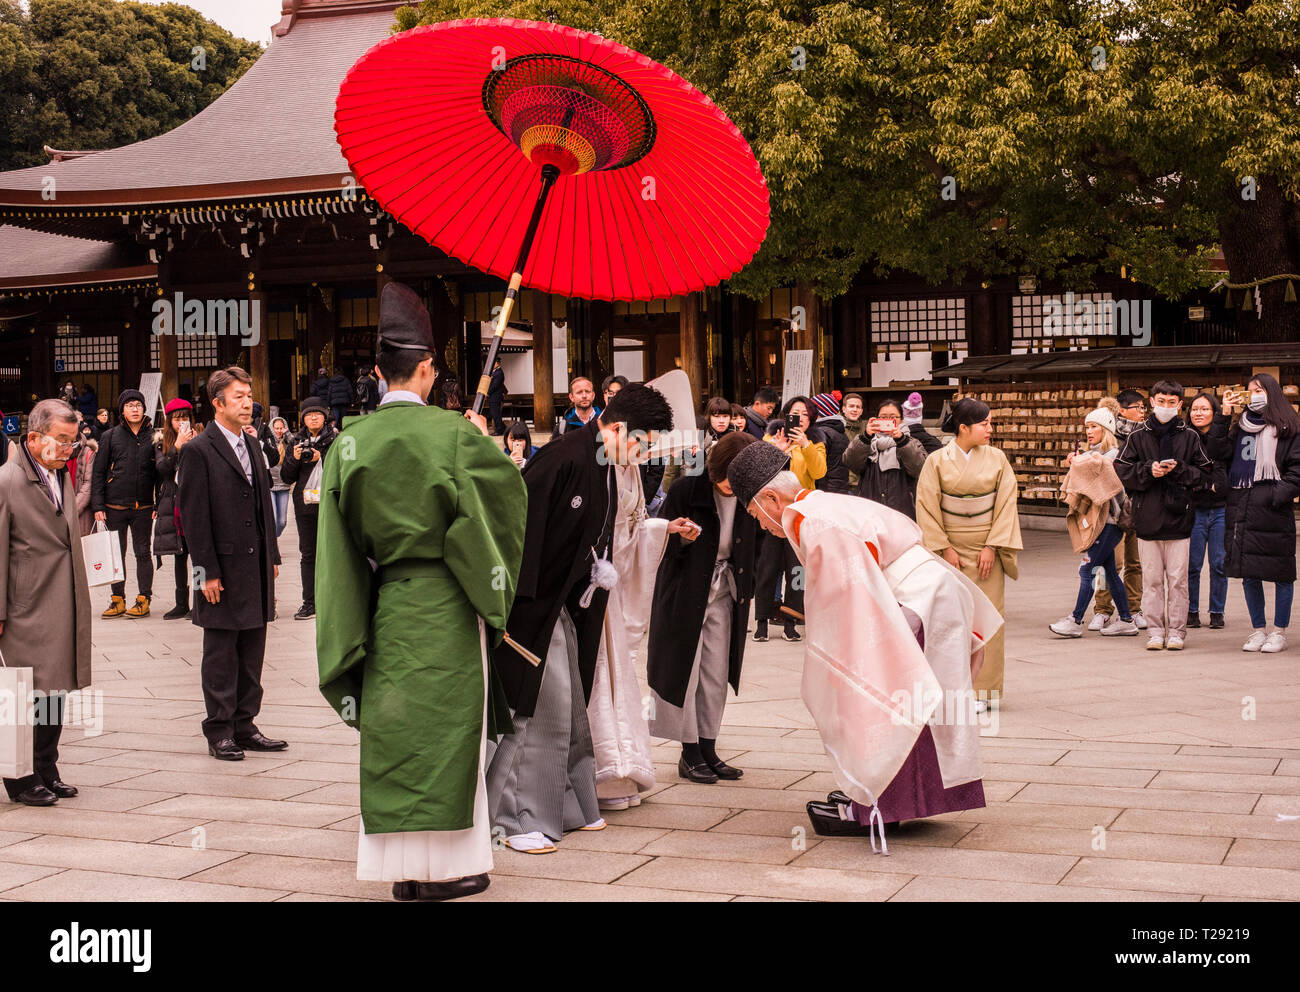 Onlookers watching traditional wedding at Meiji Jingu Shrine, Shibuya, Tokyo Stock Photo